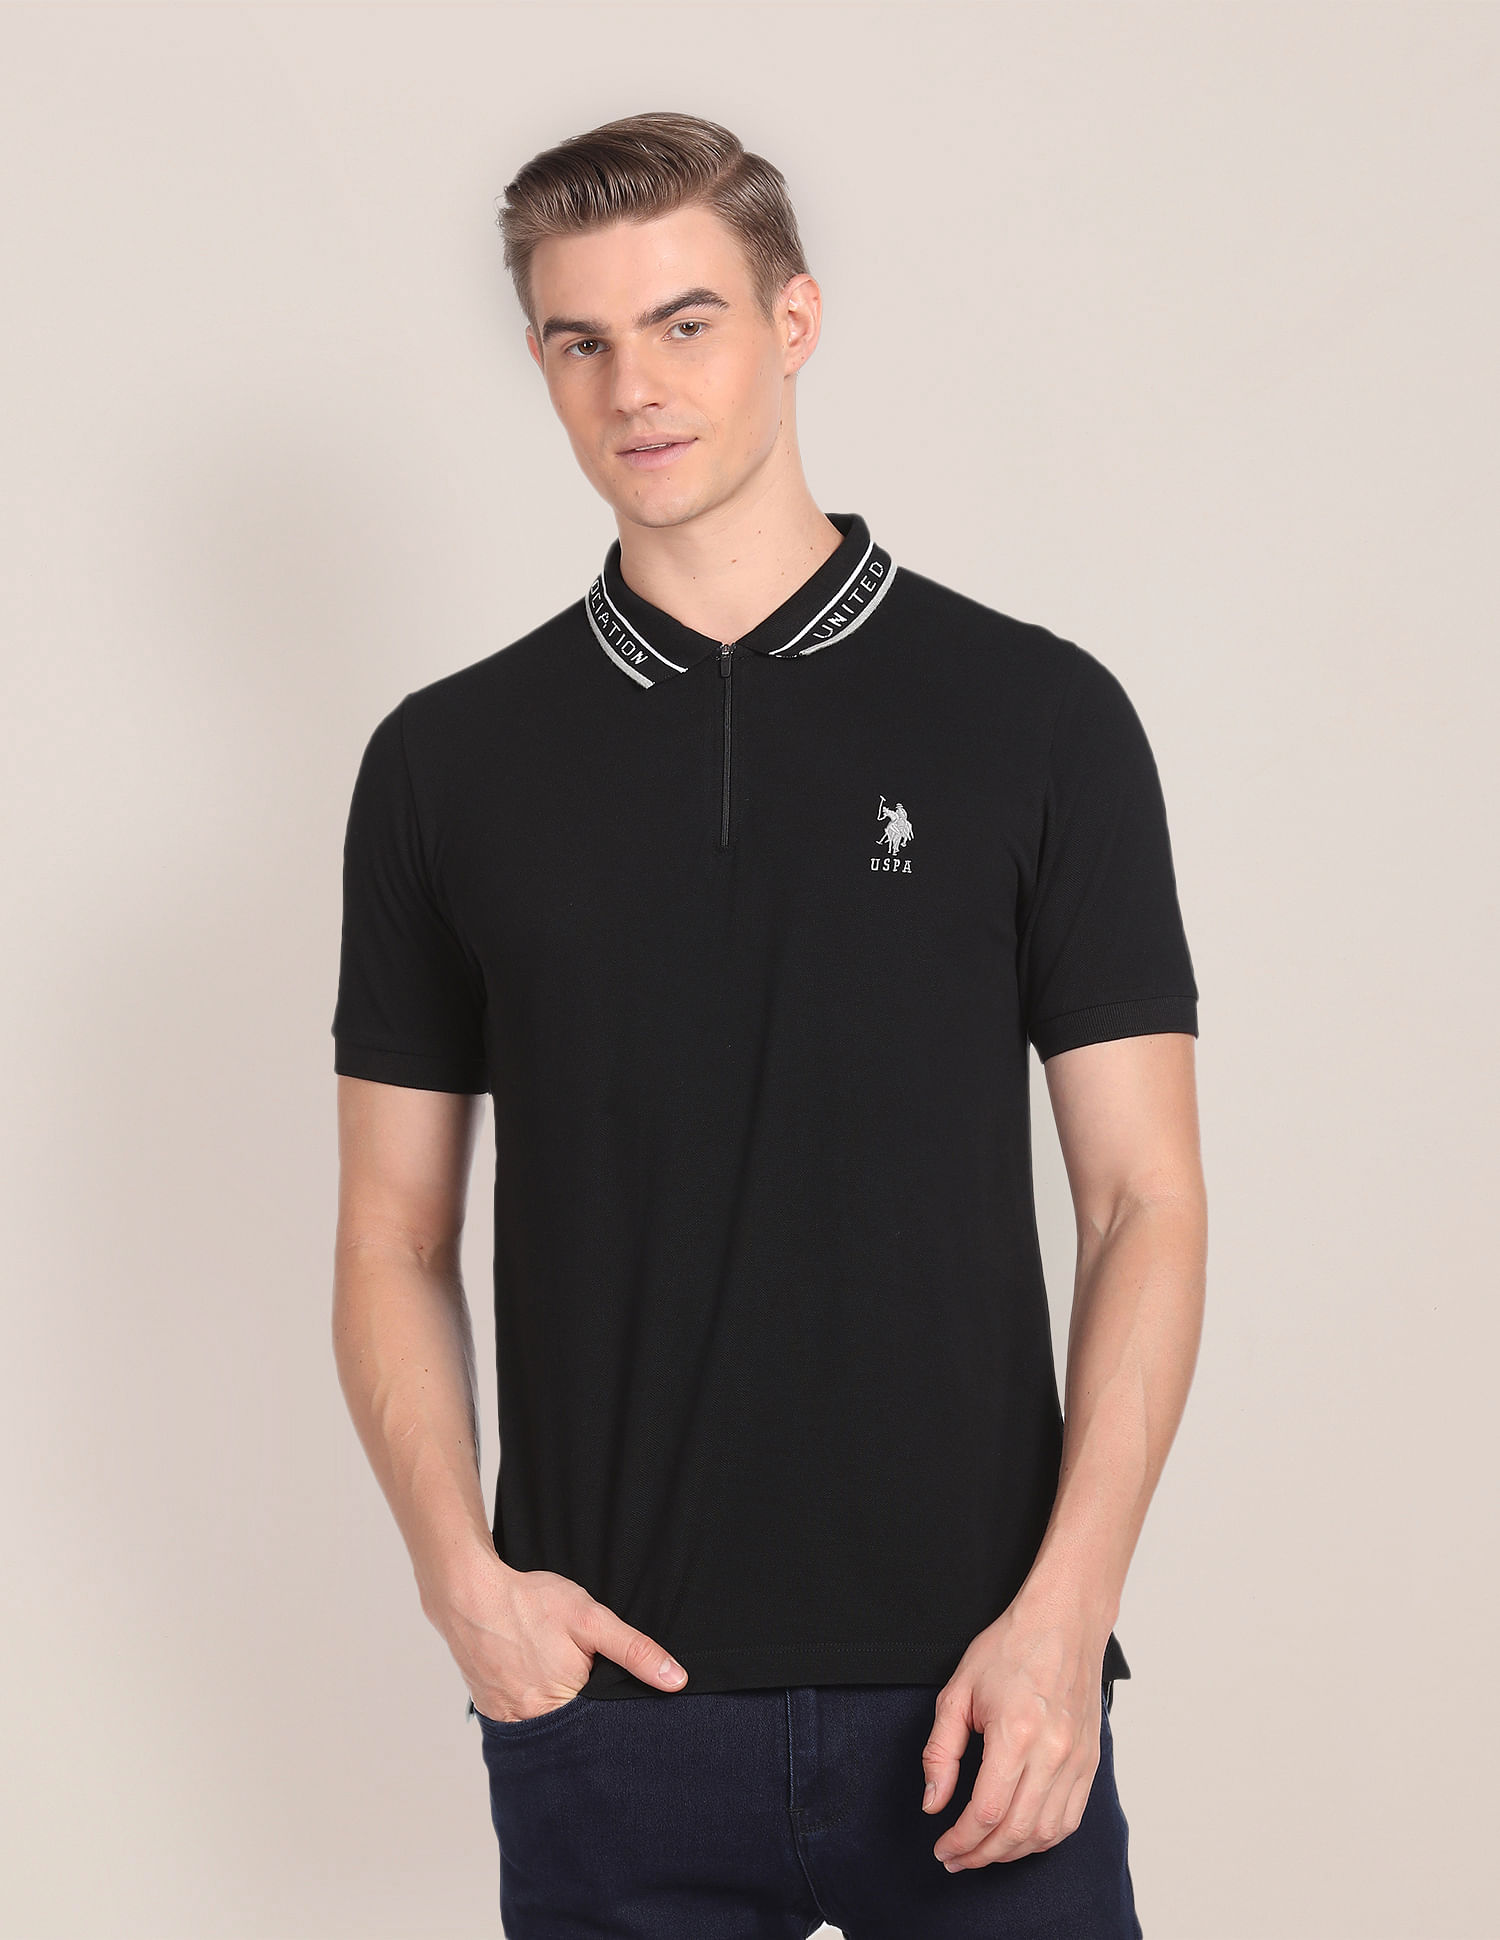 U.S. Polo Assn. Solid Luxury Polo Shirt, Black (L)